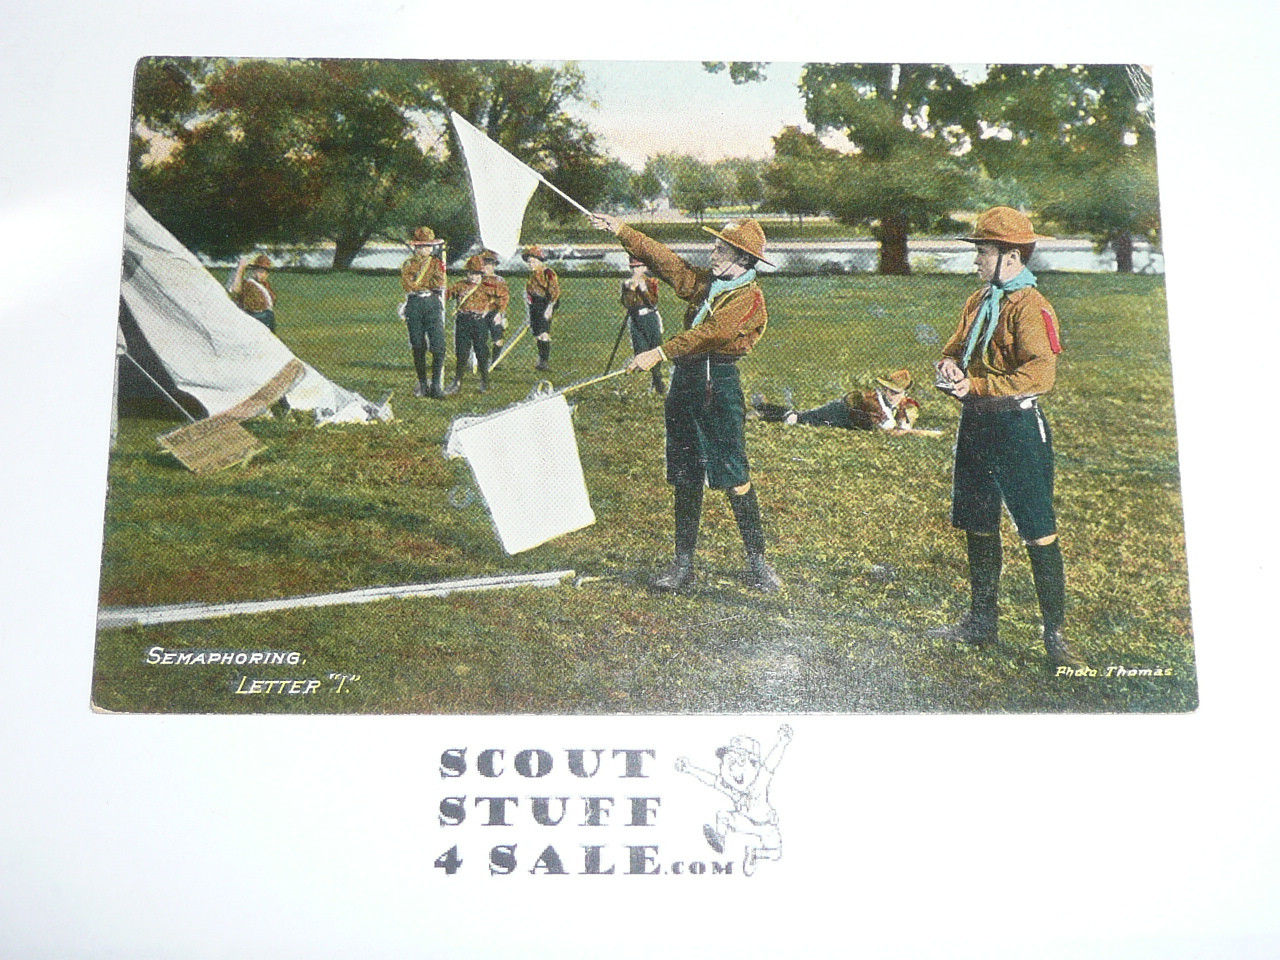 1909 British Boy Scout Postcard, colorized Photo Postcard, Boy Scouts Semaphoring Letter I, unused